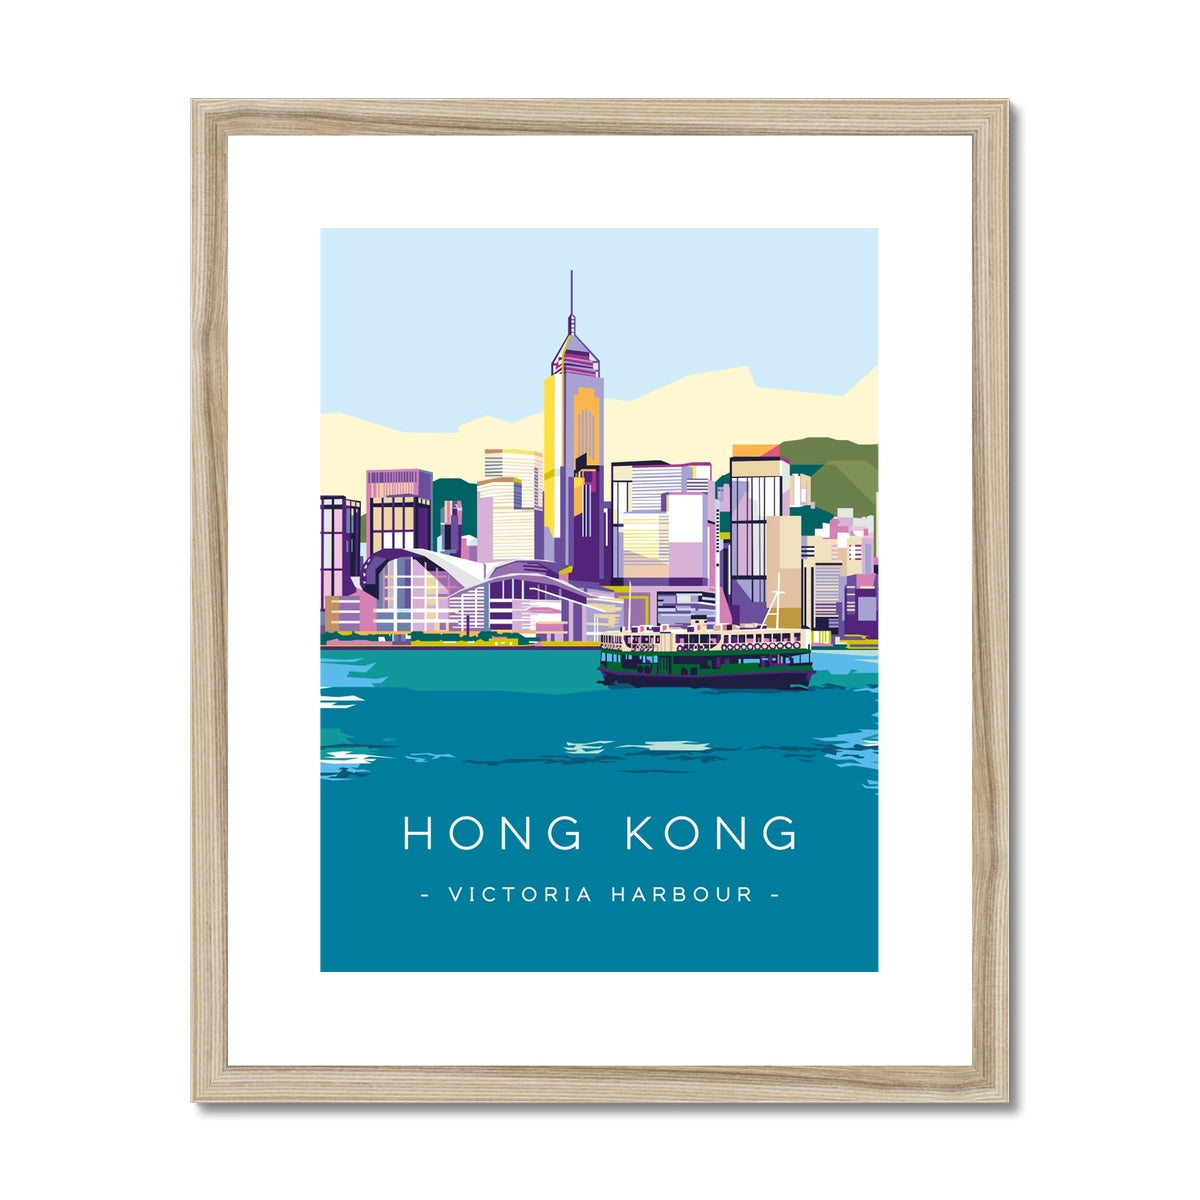 Hong Kong Travel - Victoria Harbour  Framed & Mounted Print